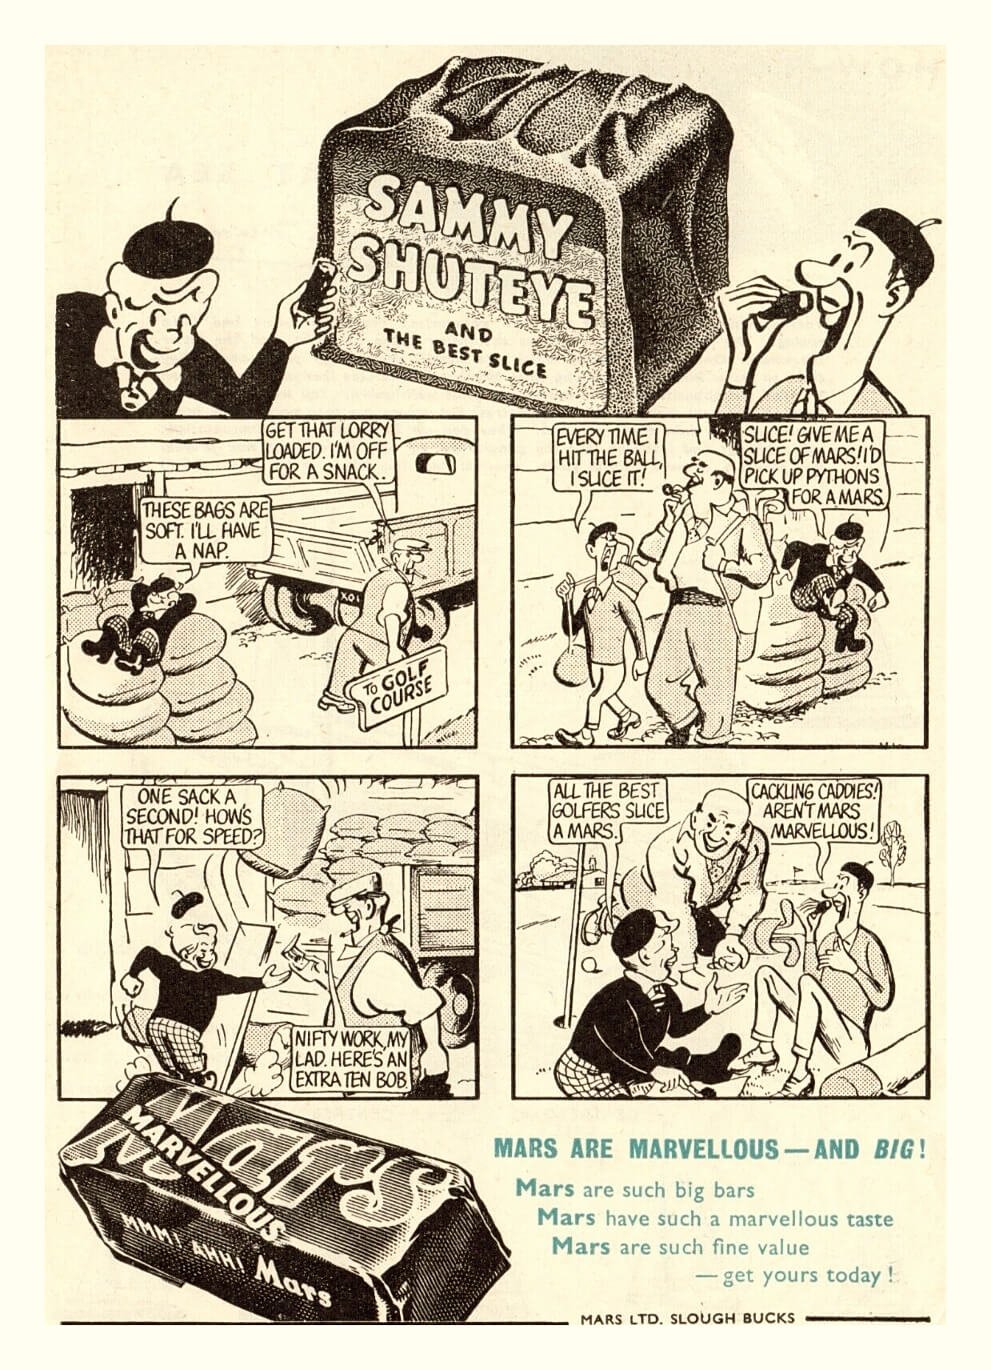 Sammy Shuteye and the Best Slice comic strip advert for Mars bar